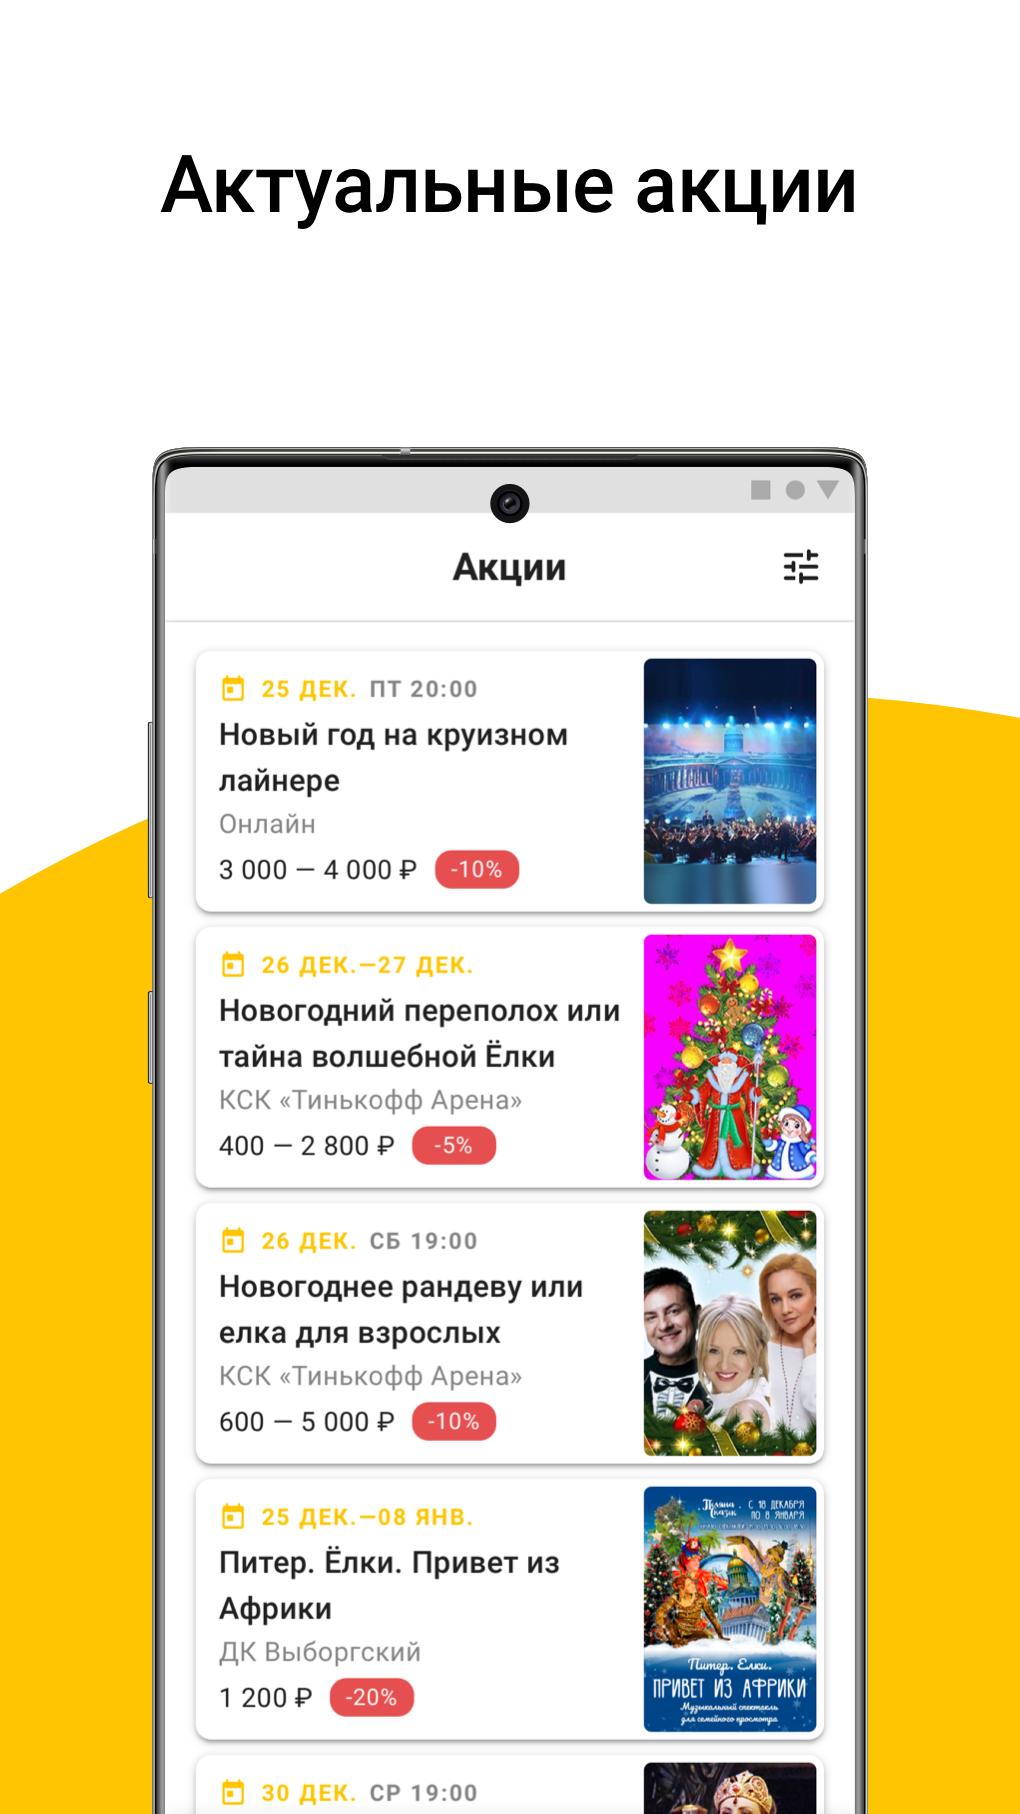 Kassir.Ru: Афиши и билеты на концерты и спектакли 1.0.2 Screenshot 5